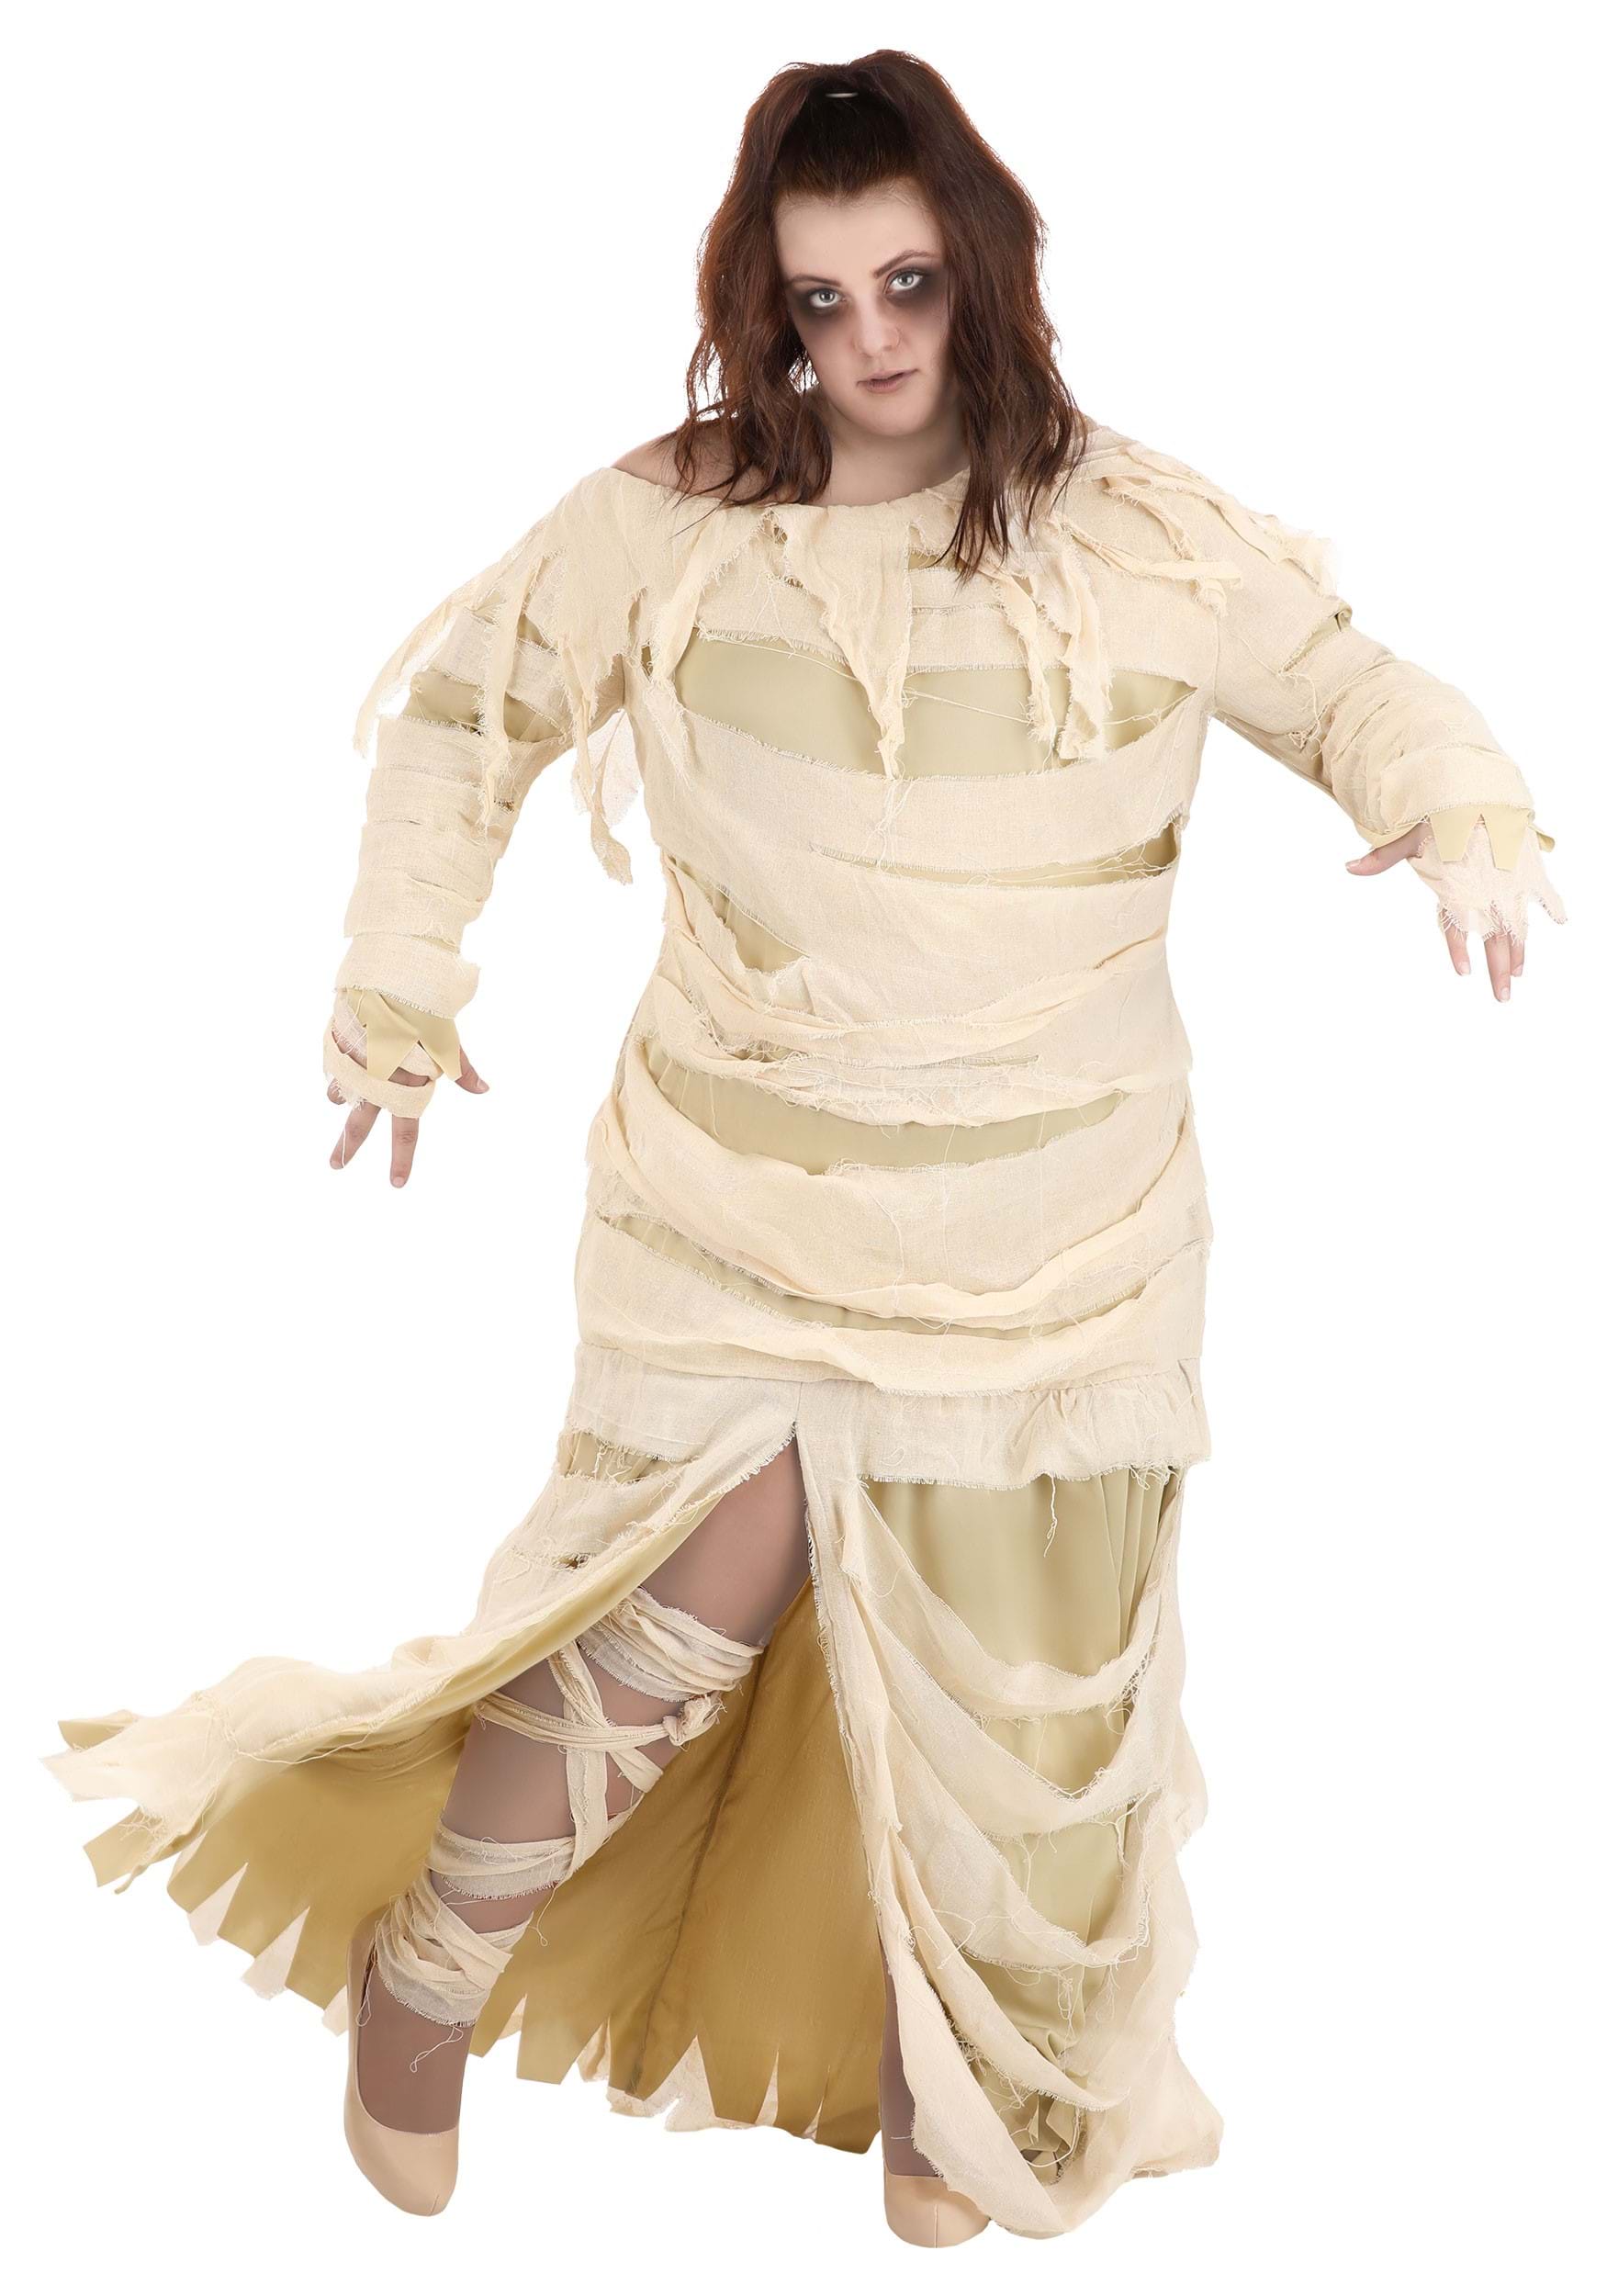 Photos - Fancy Dress FUN Costumes Plus Size Full Length Mummy Women's Costume Brown